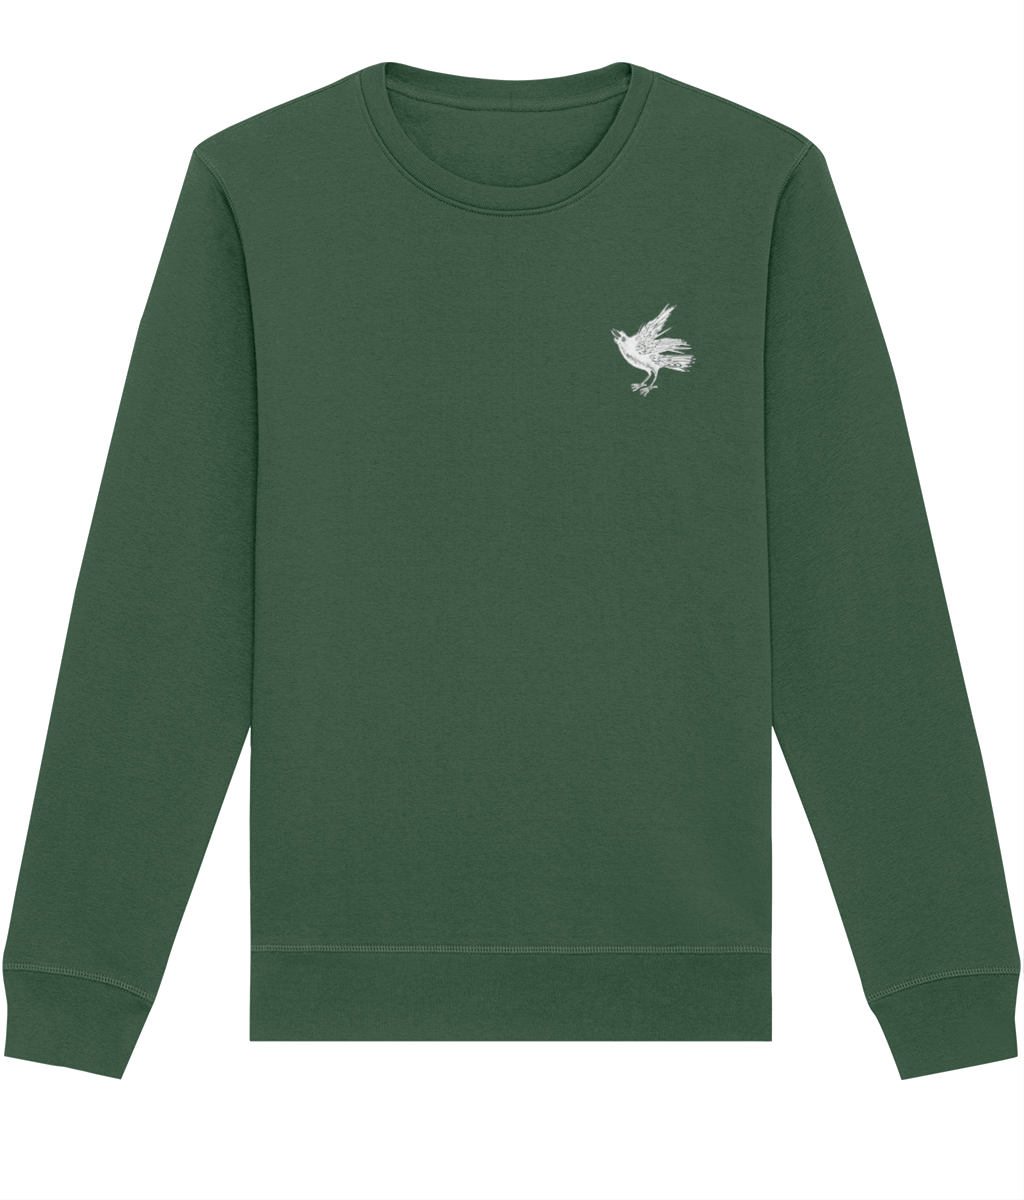 Unisex Sweatshirt - Signature White Crow